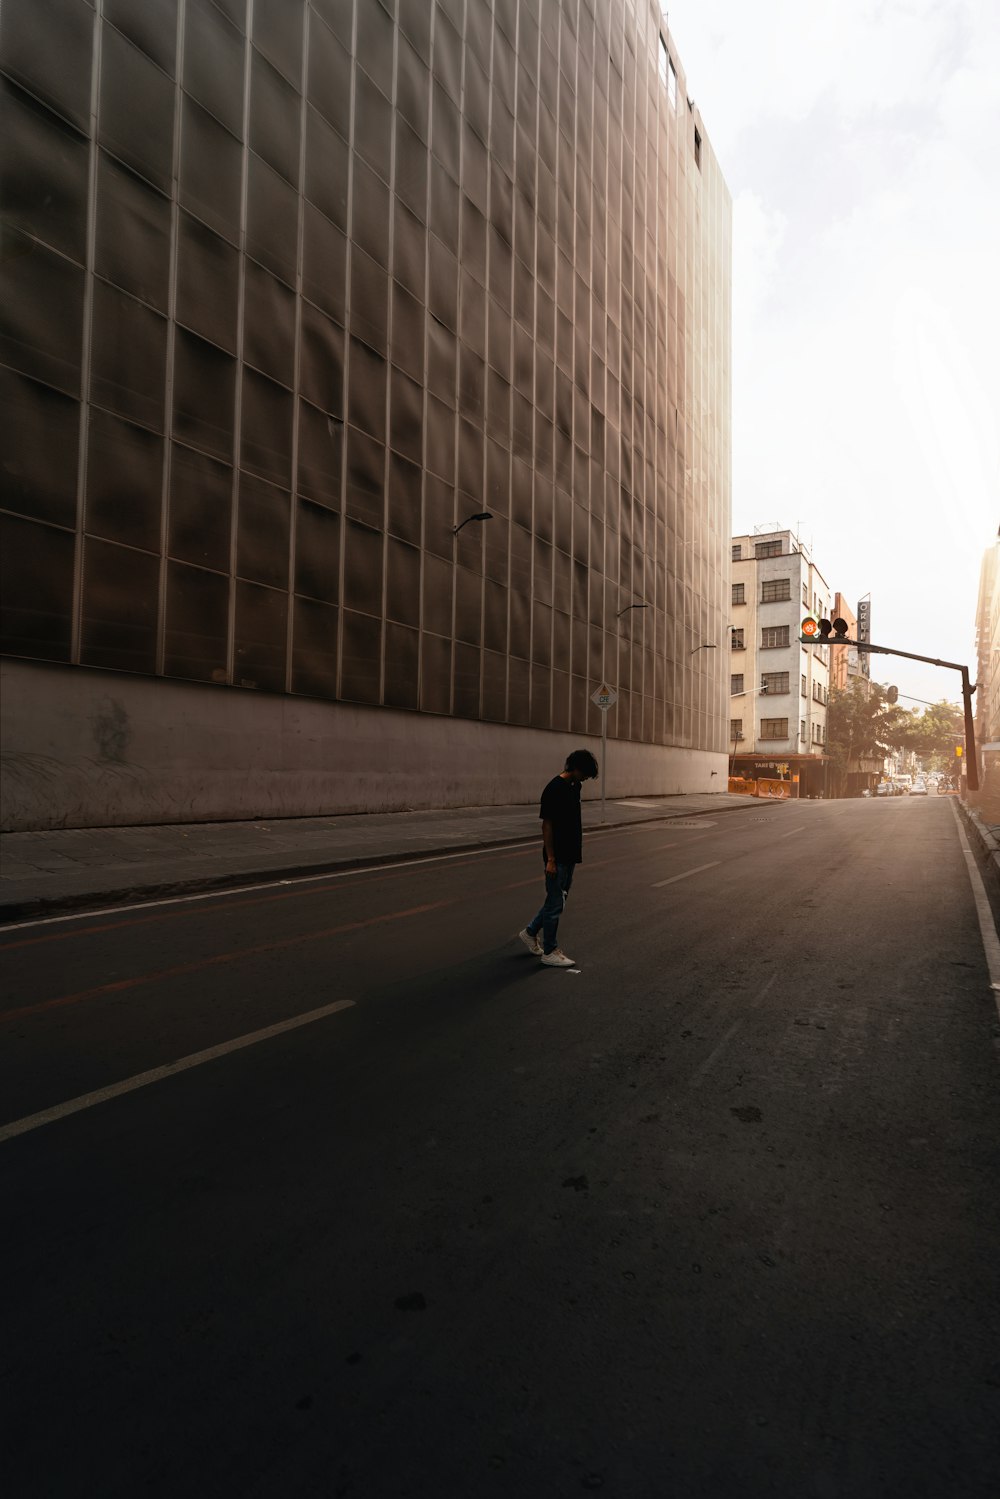 a man riding a skateboard down a street next to tall buildings